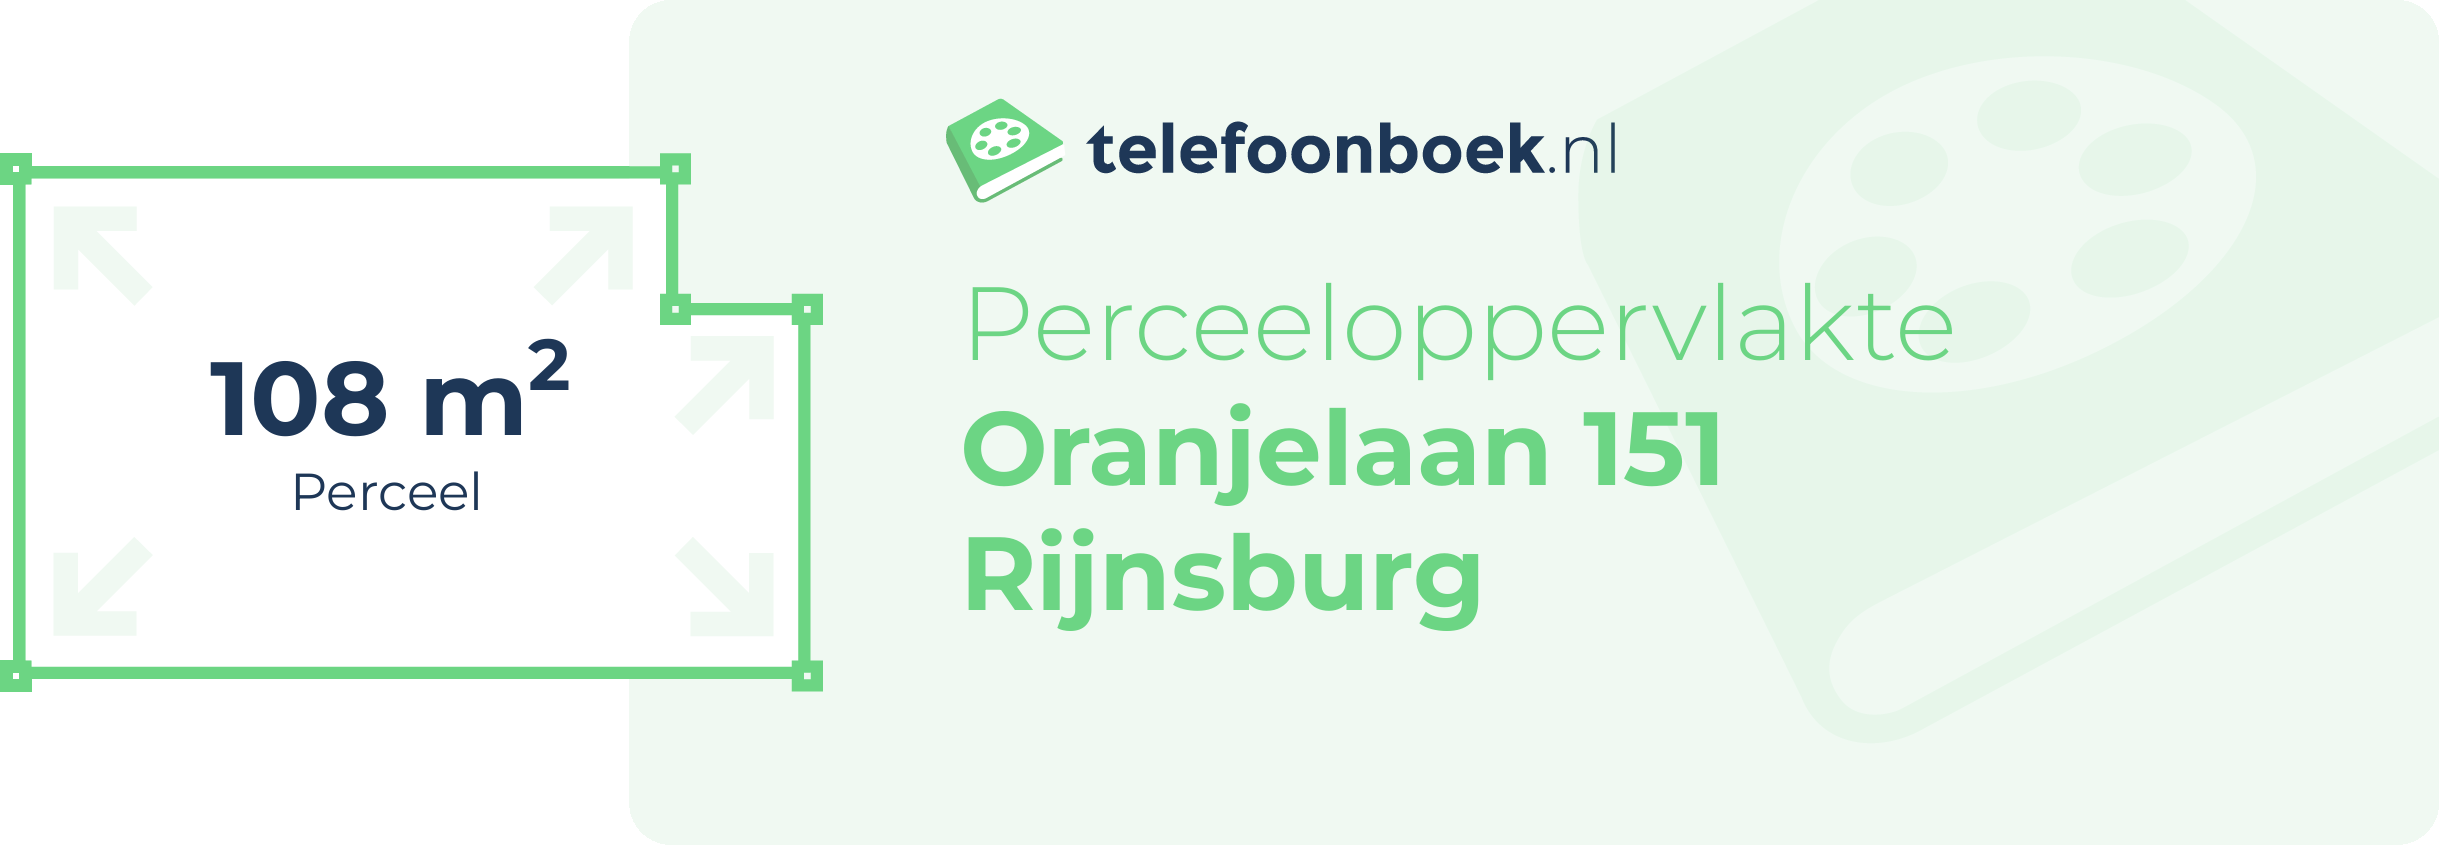 Perceeloppervlakte Oranjelaan 151 Rijnsburg